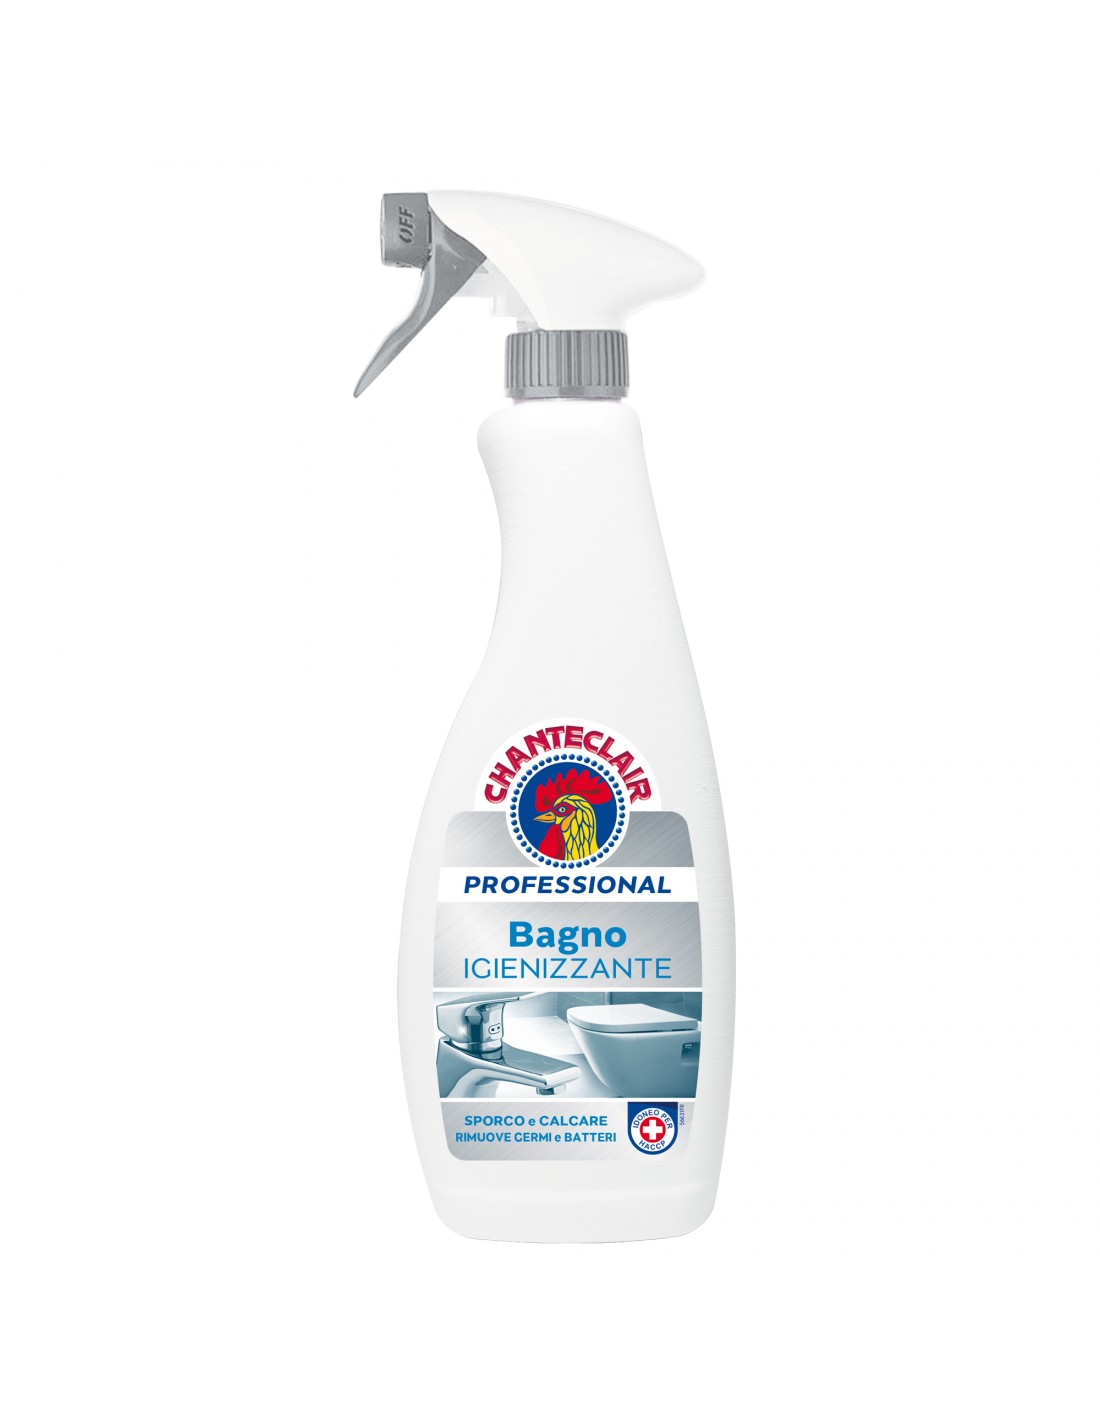 Chanteclair Detergente Bagno Igienizzante Professional - spray da